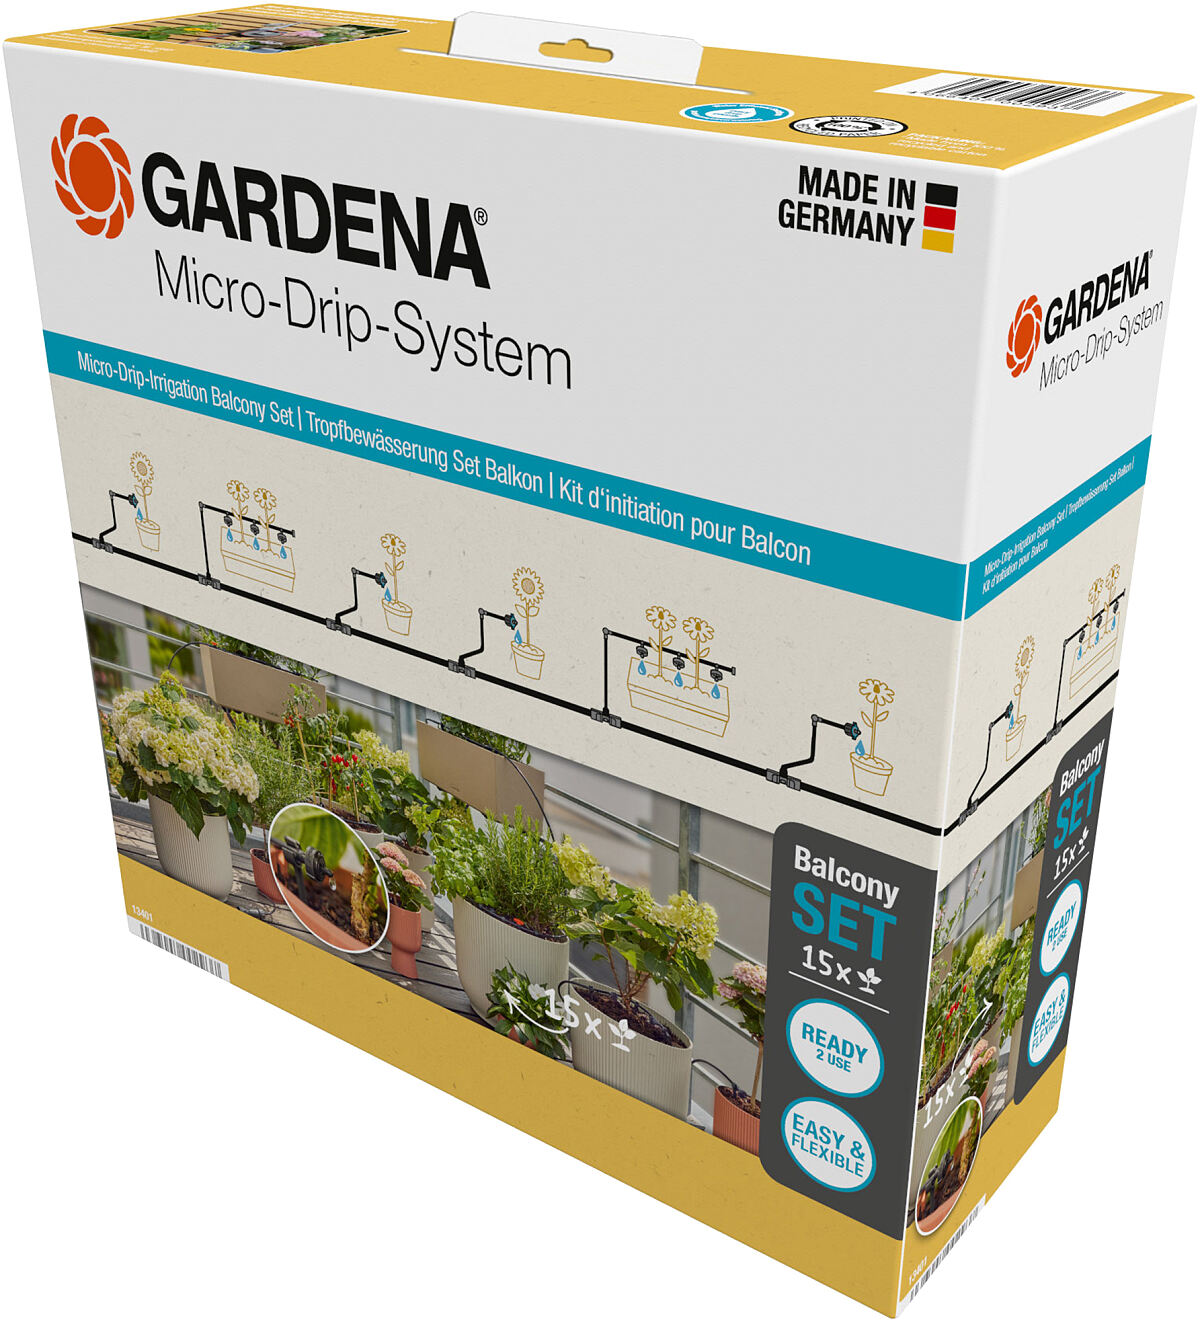 GARDENA Micro-Drip-Irrigation Balcony Set (15 plants)